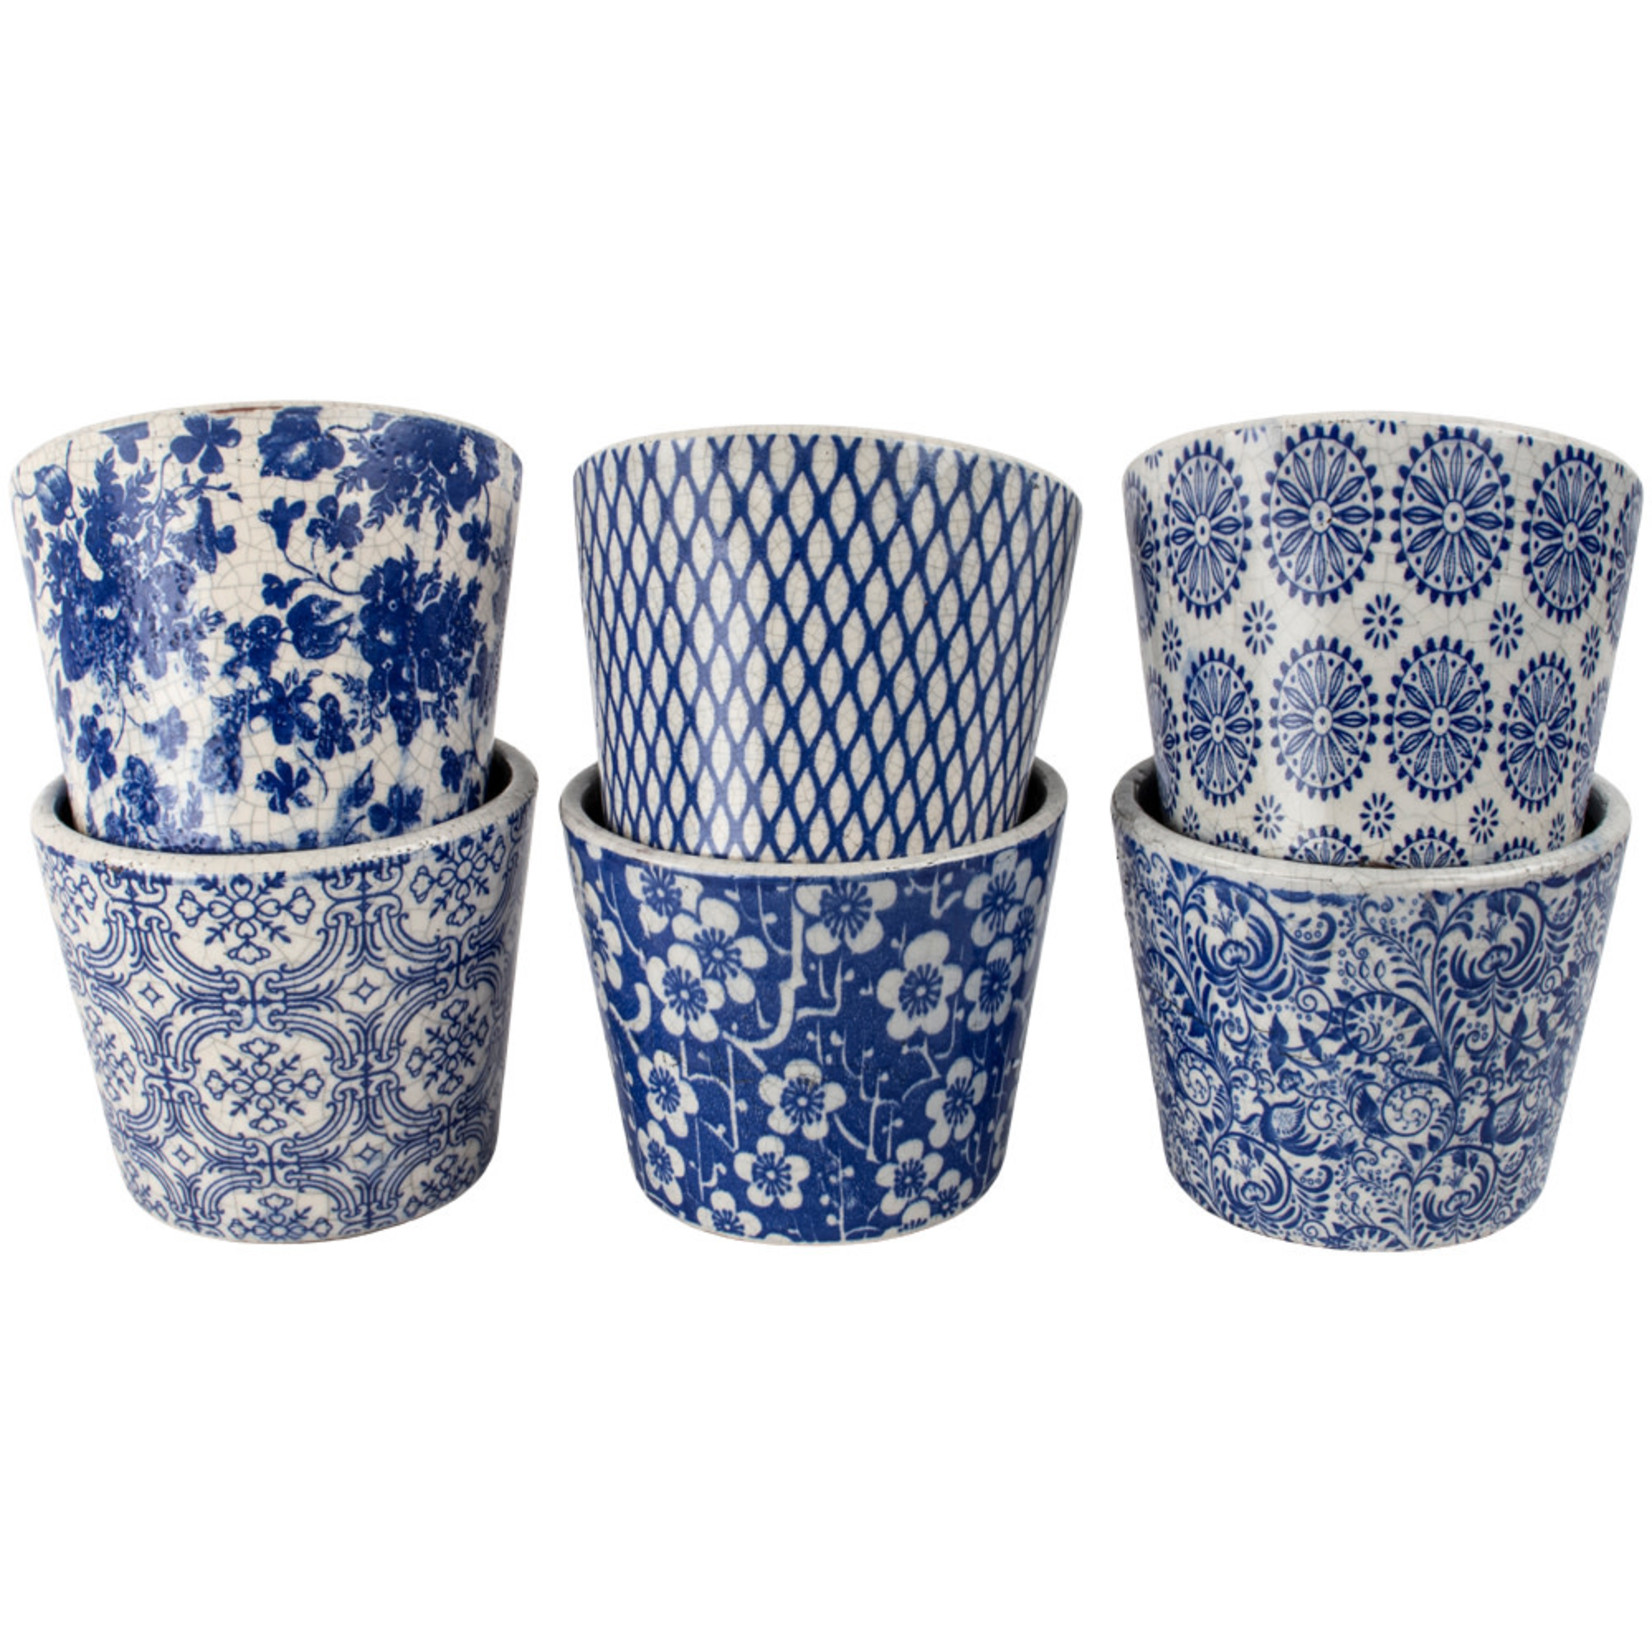 Grand Interiors Old Style Dutch Pots Blue Asst 6 Designs